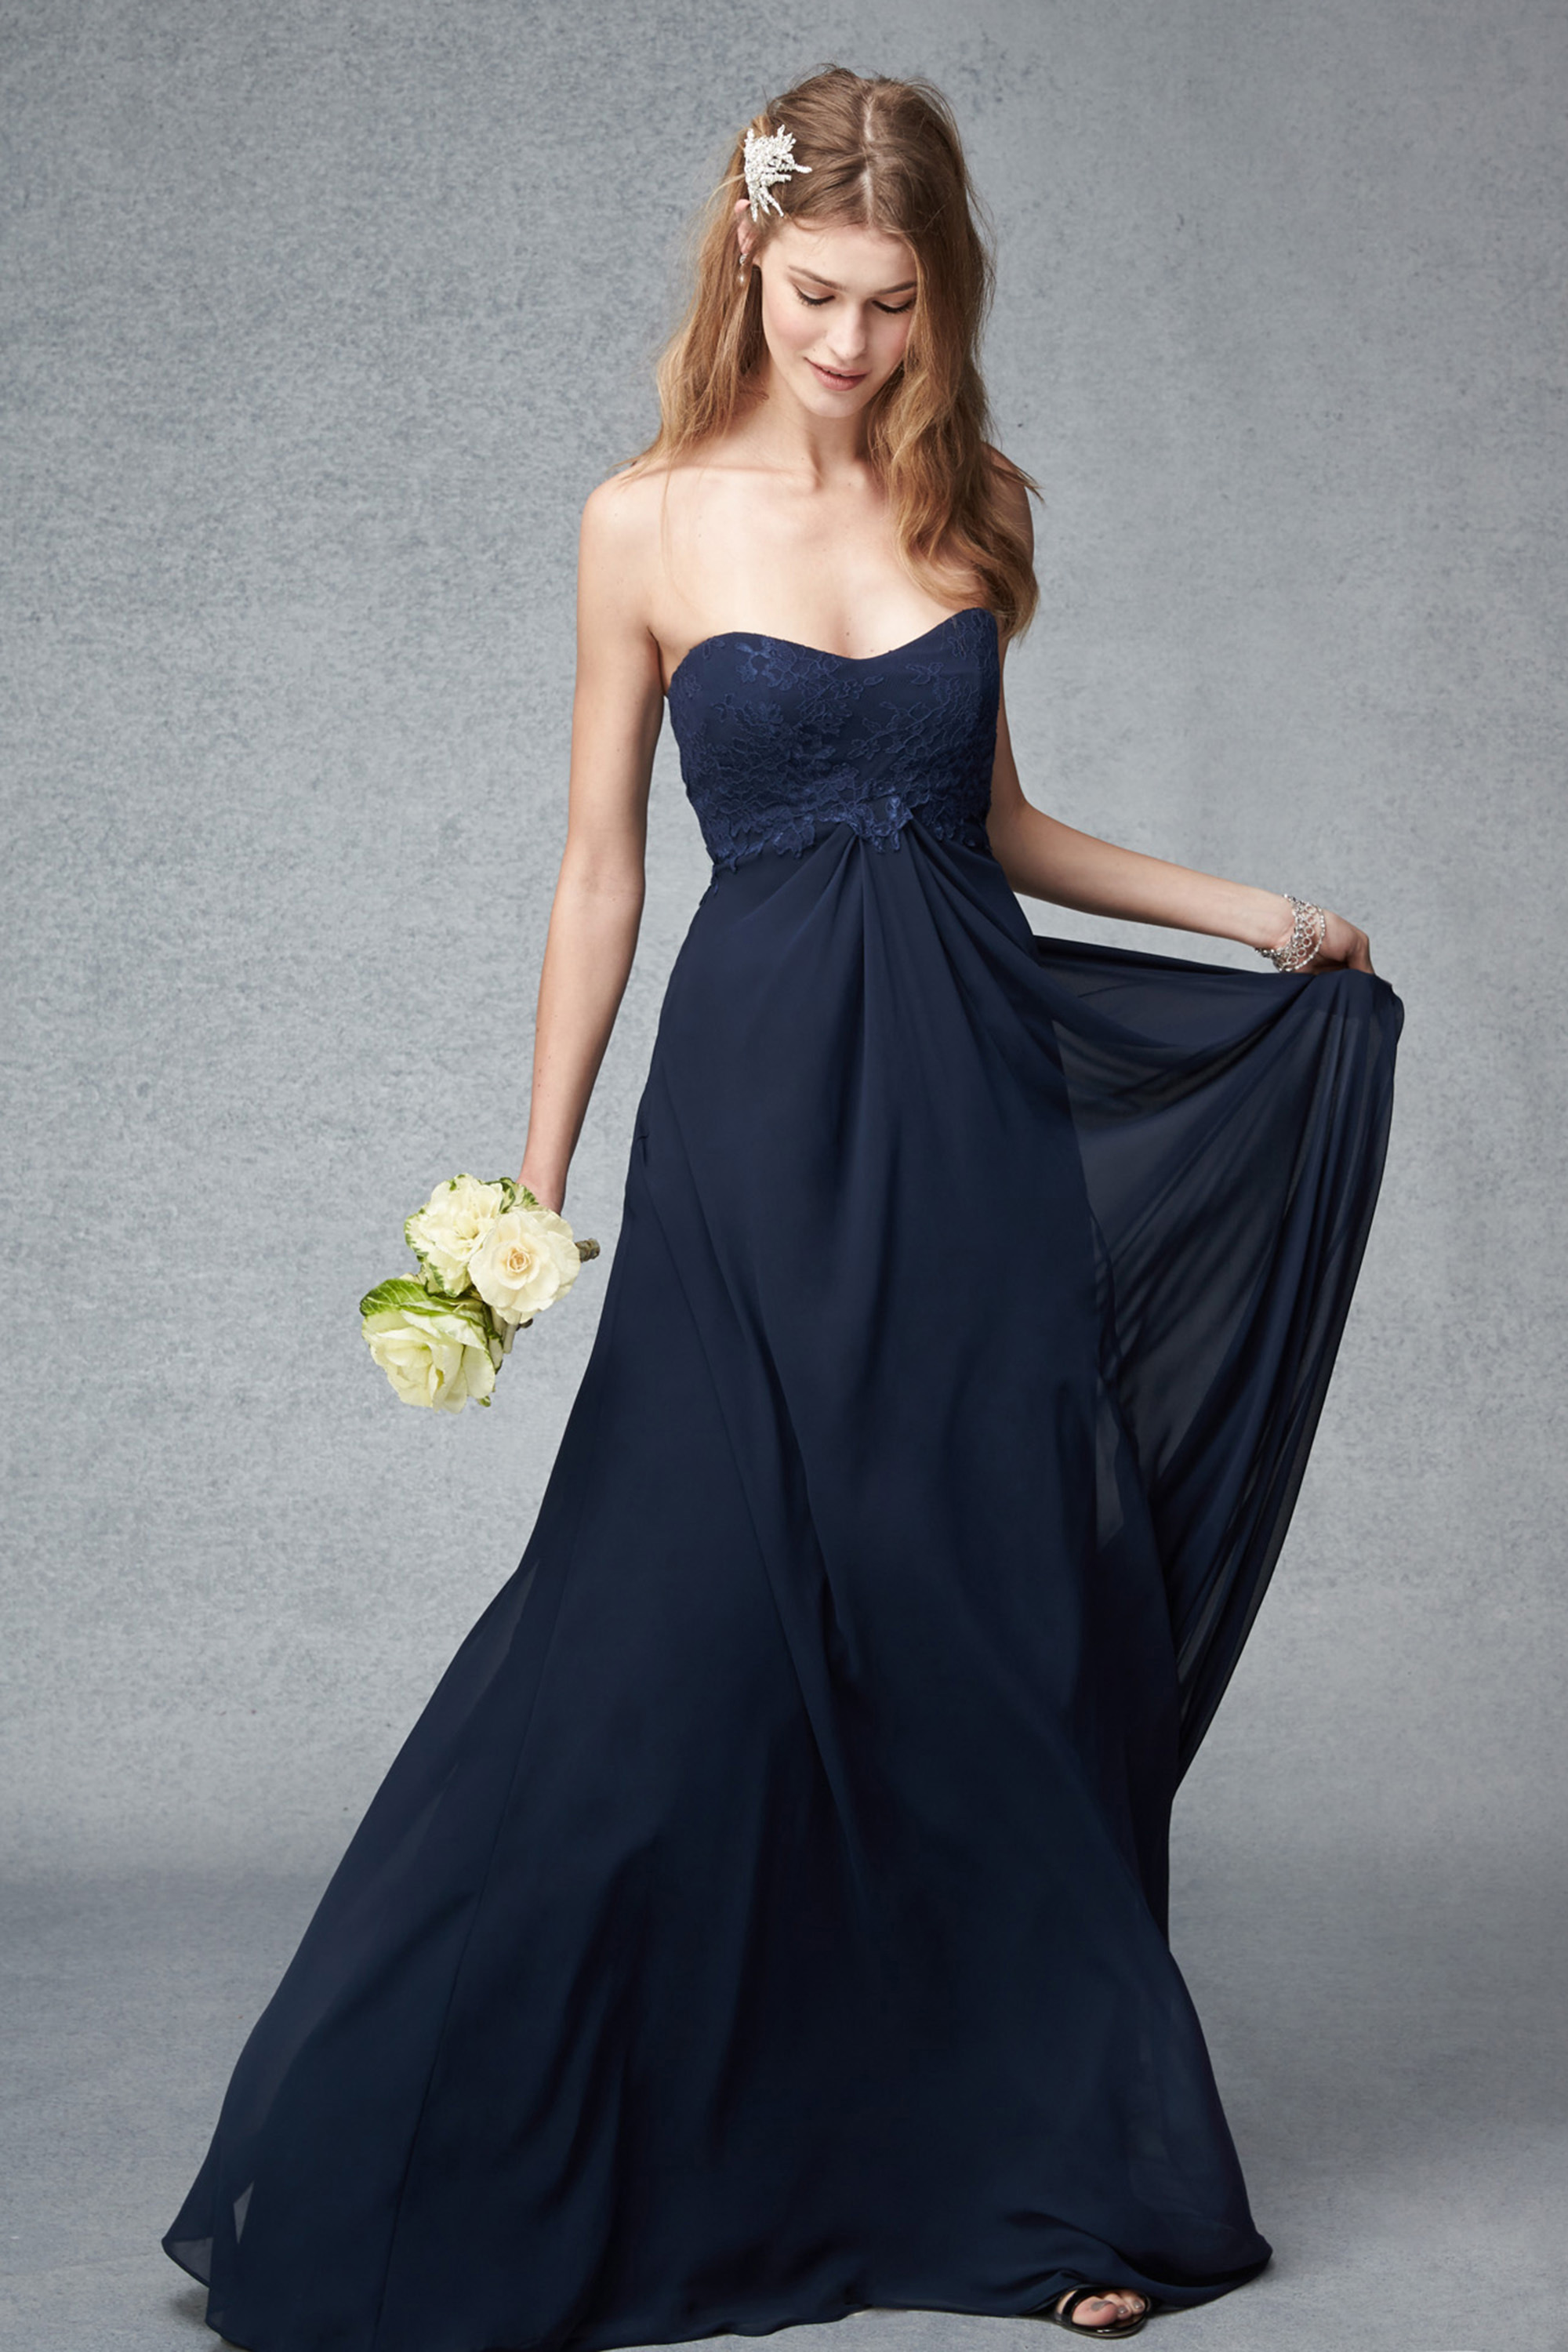 Monique Lhuillier Fall 2015 Bridesmaid Dresses Collection